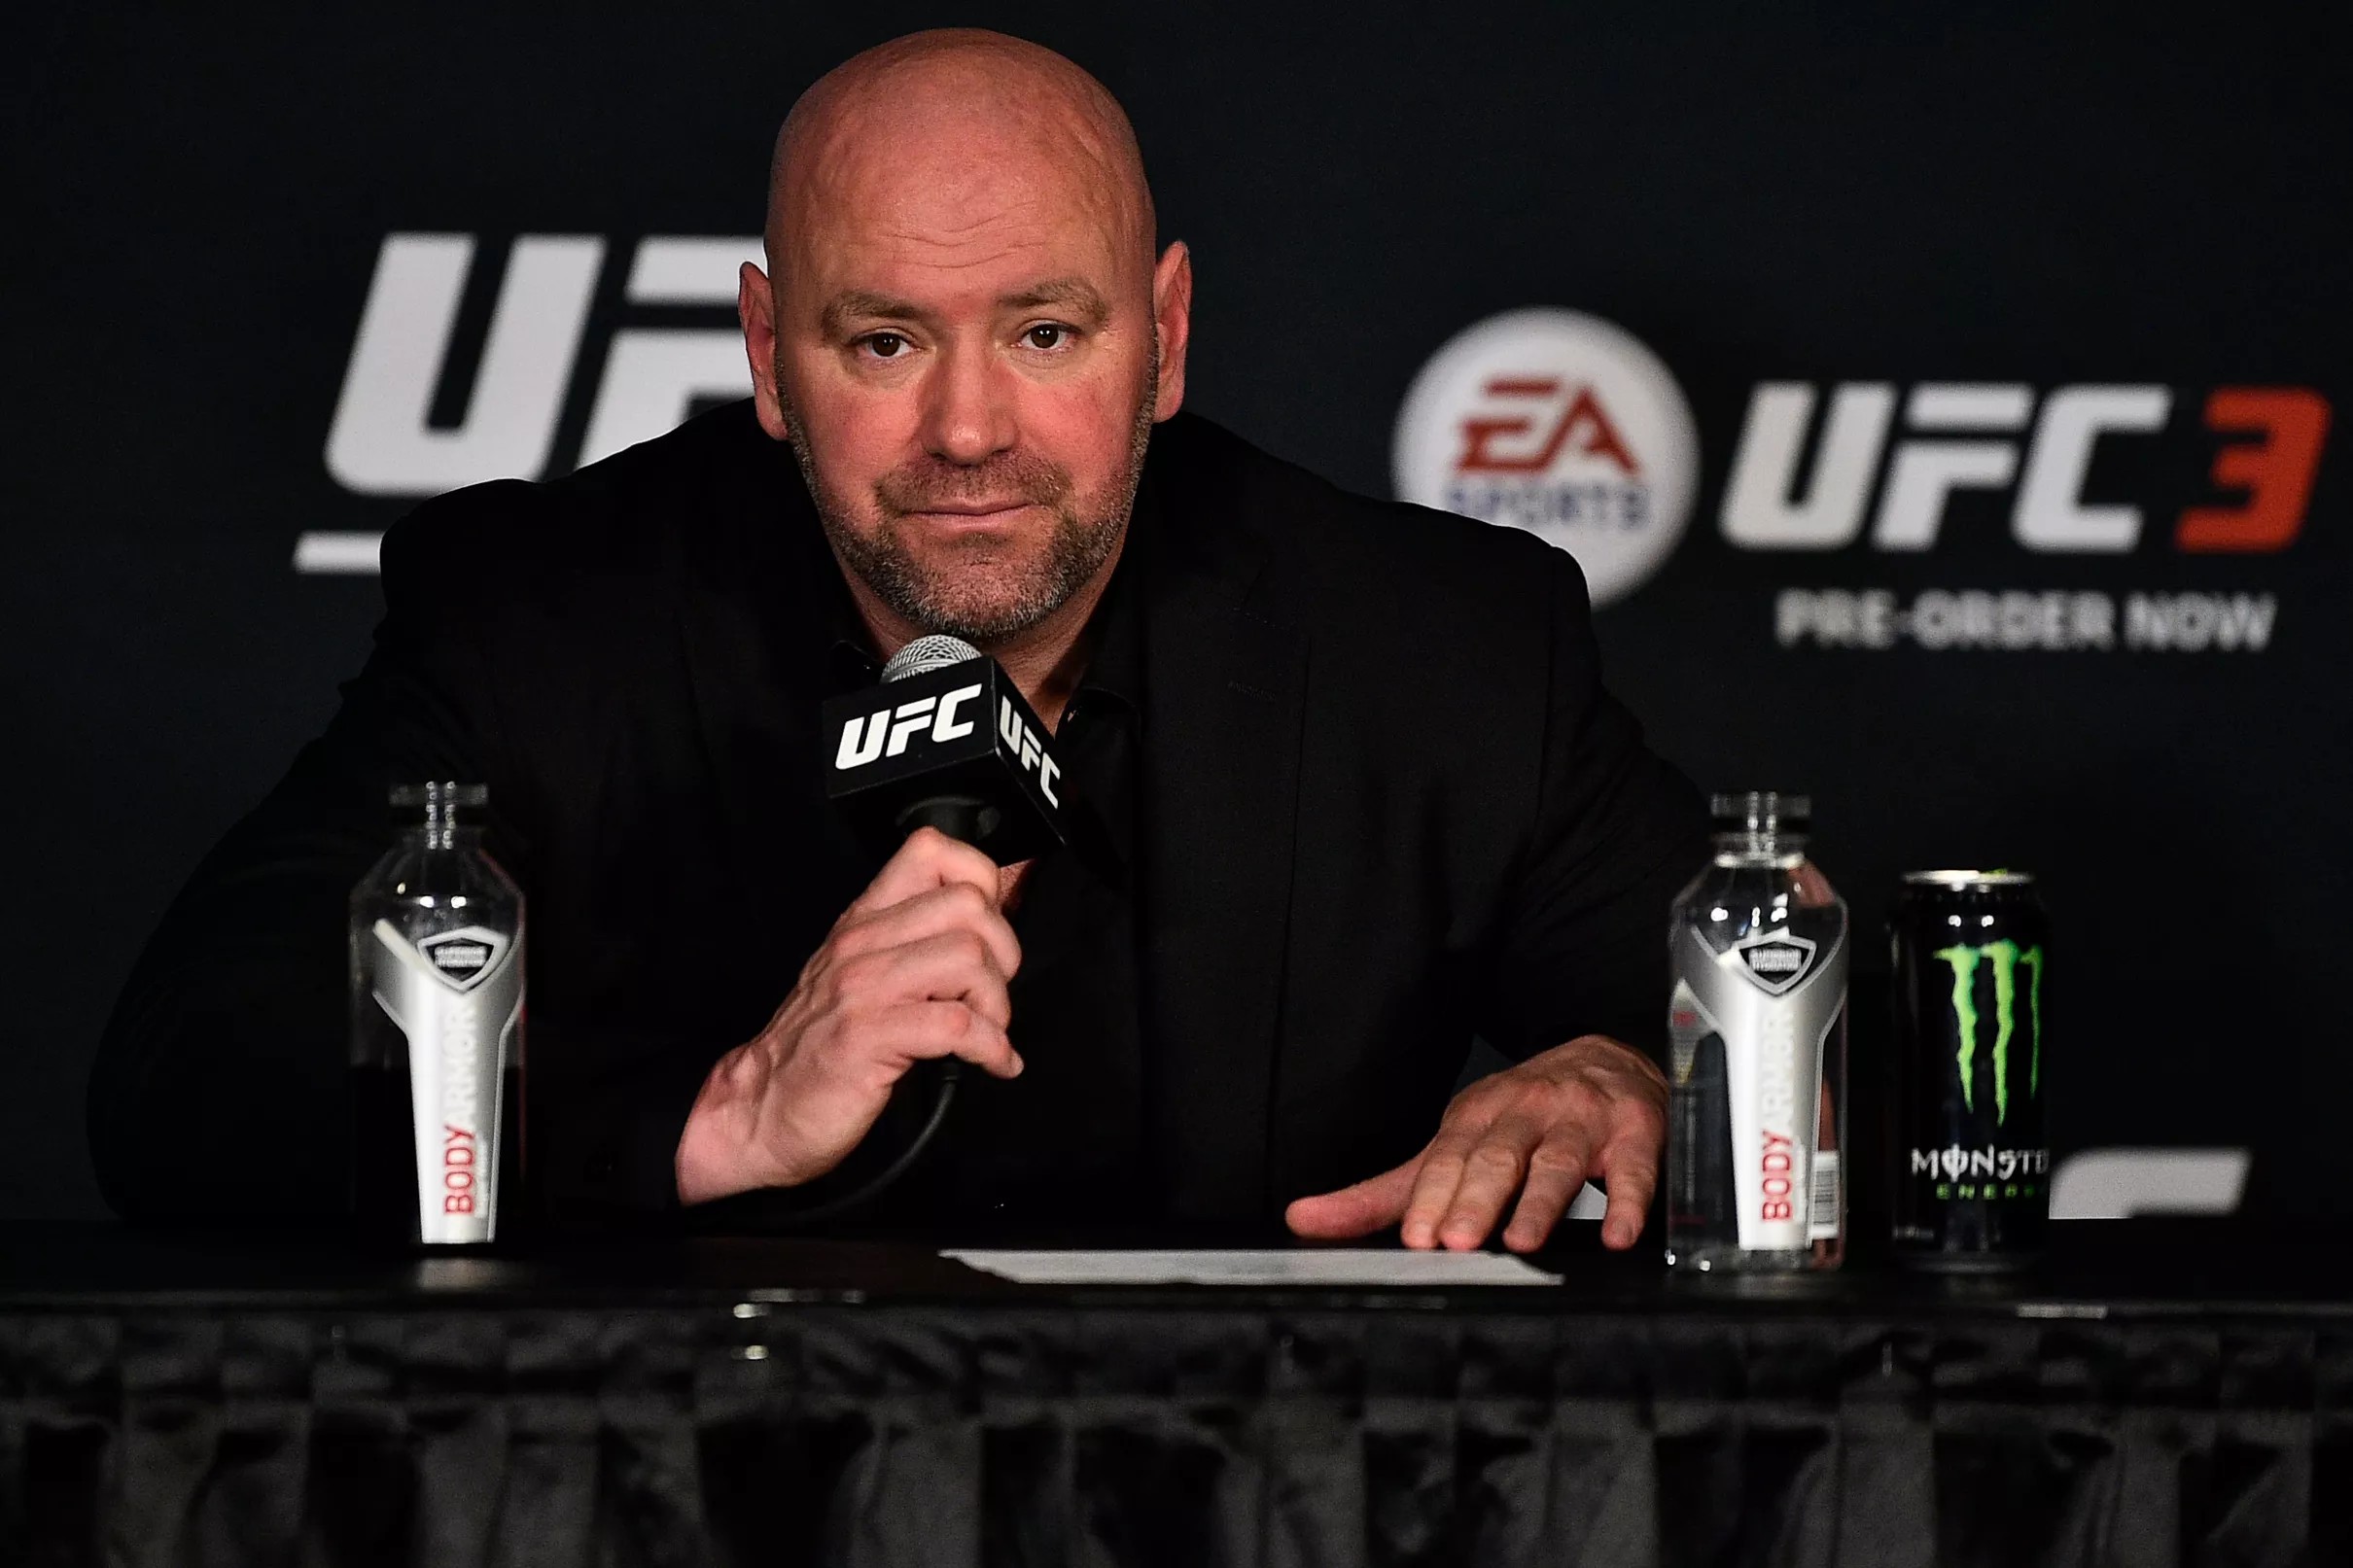 Dana White has a piece of advice for UFC fighters demanding “big money